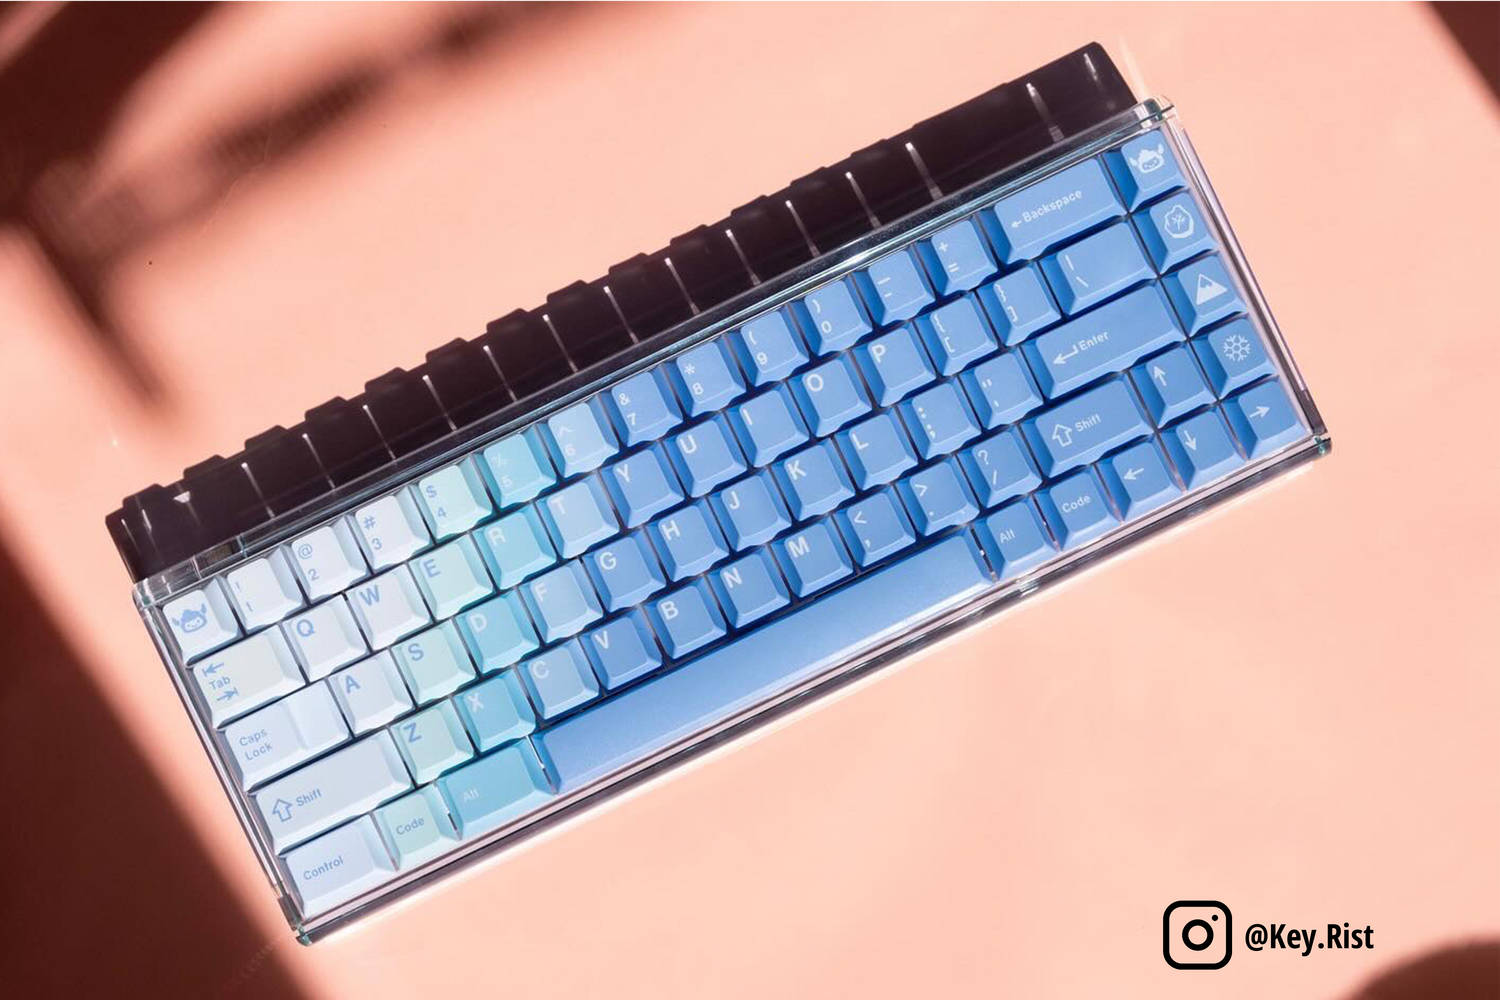 [Extras] Freja65 65% Glass Keyboard Kit